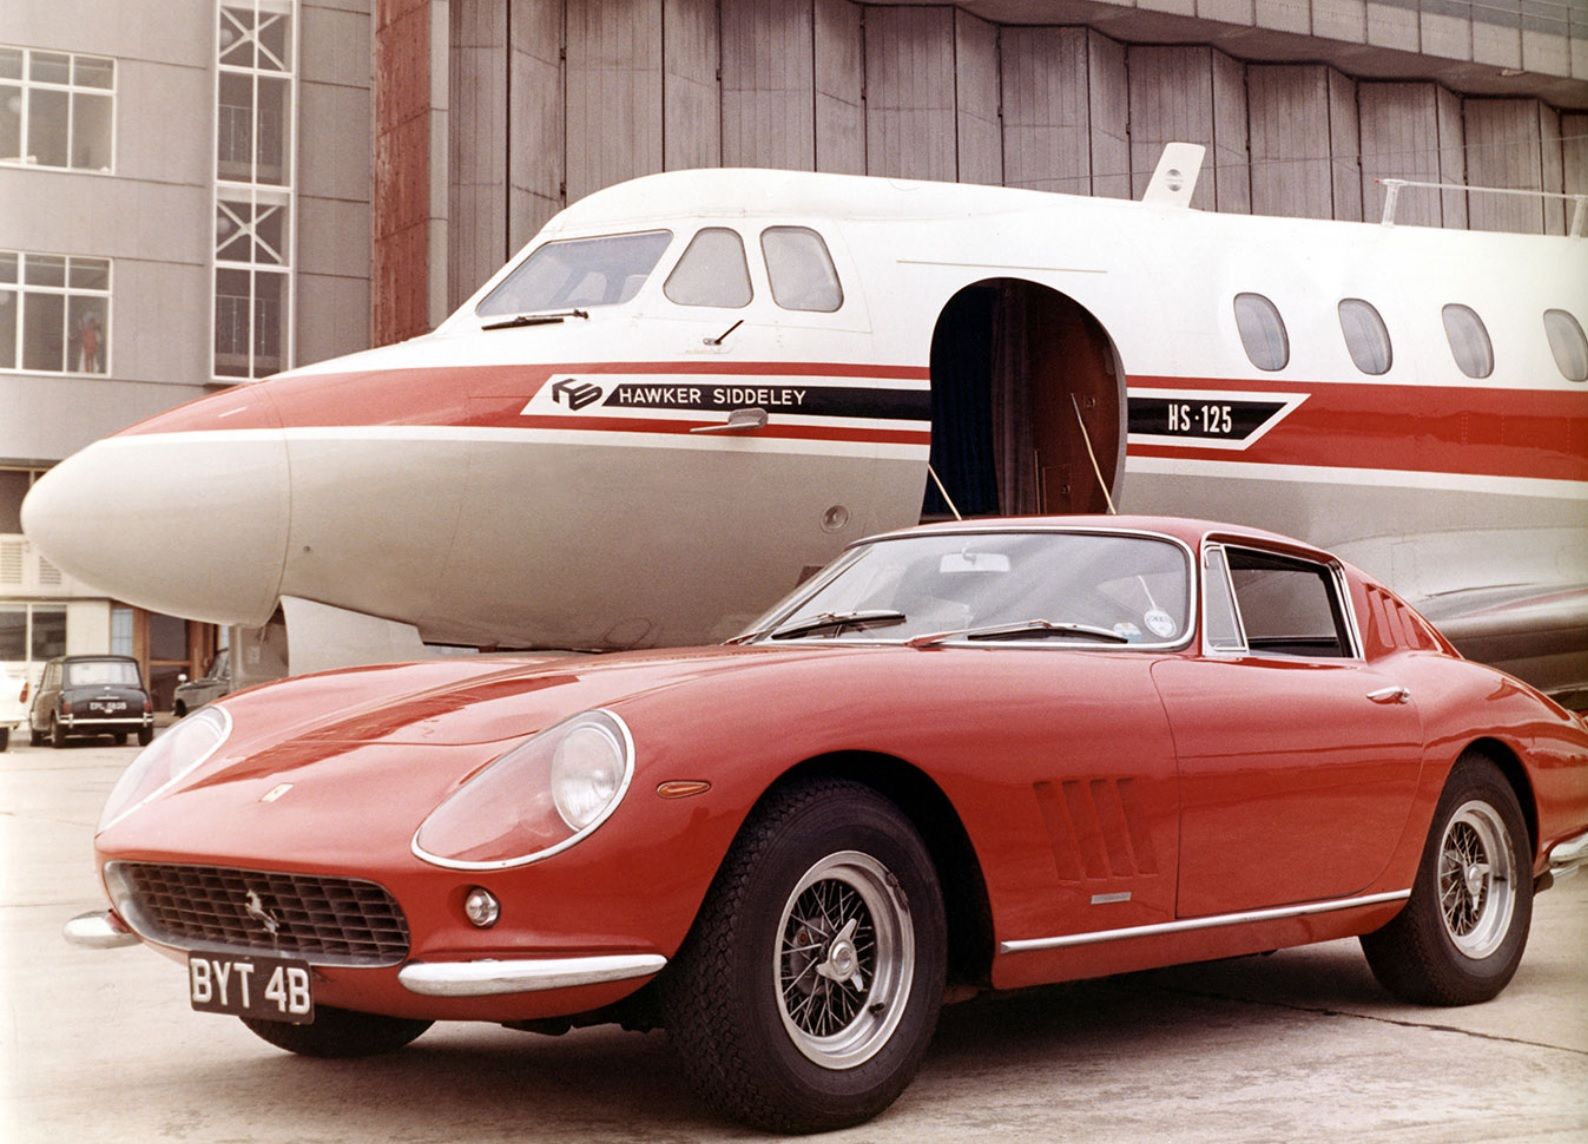 The 1964 Ferrari 275 GTB contrasted to a plane.